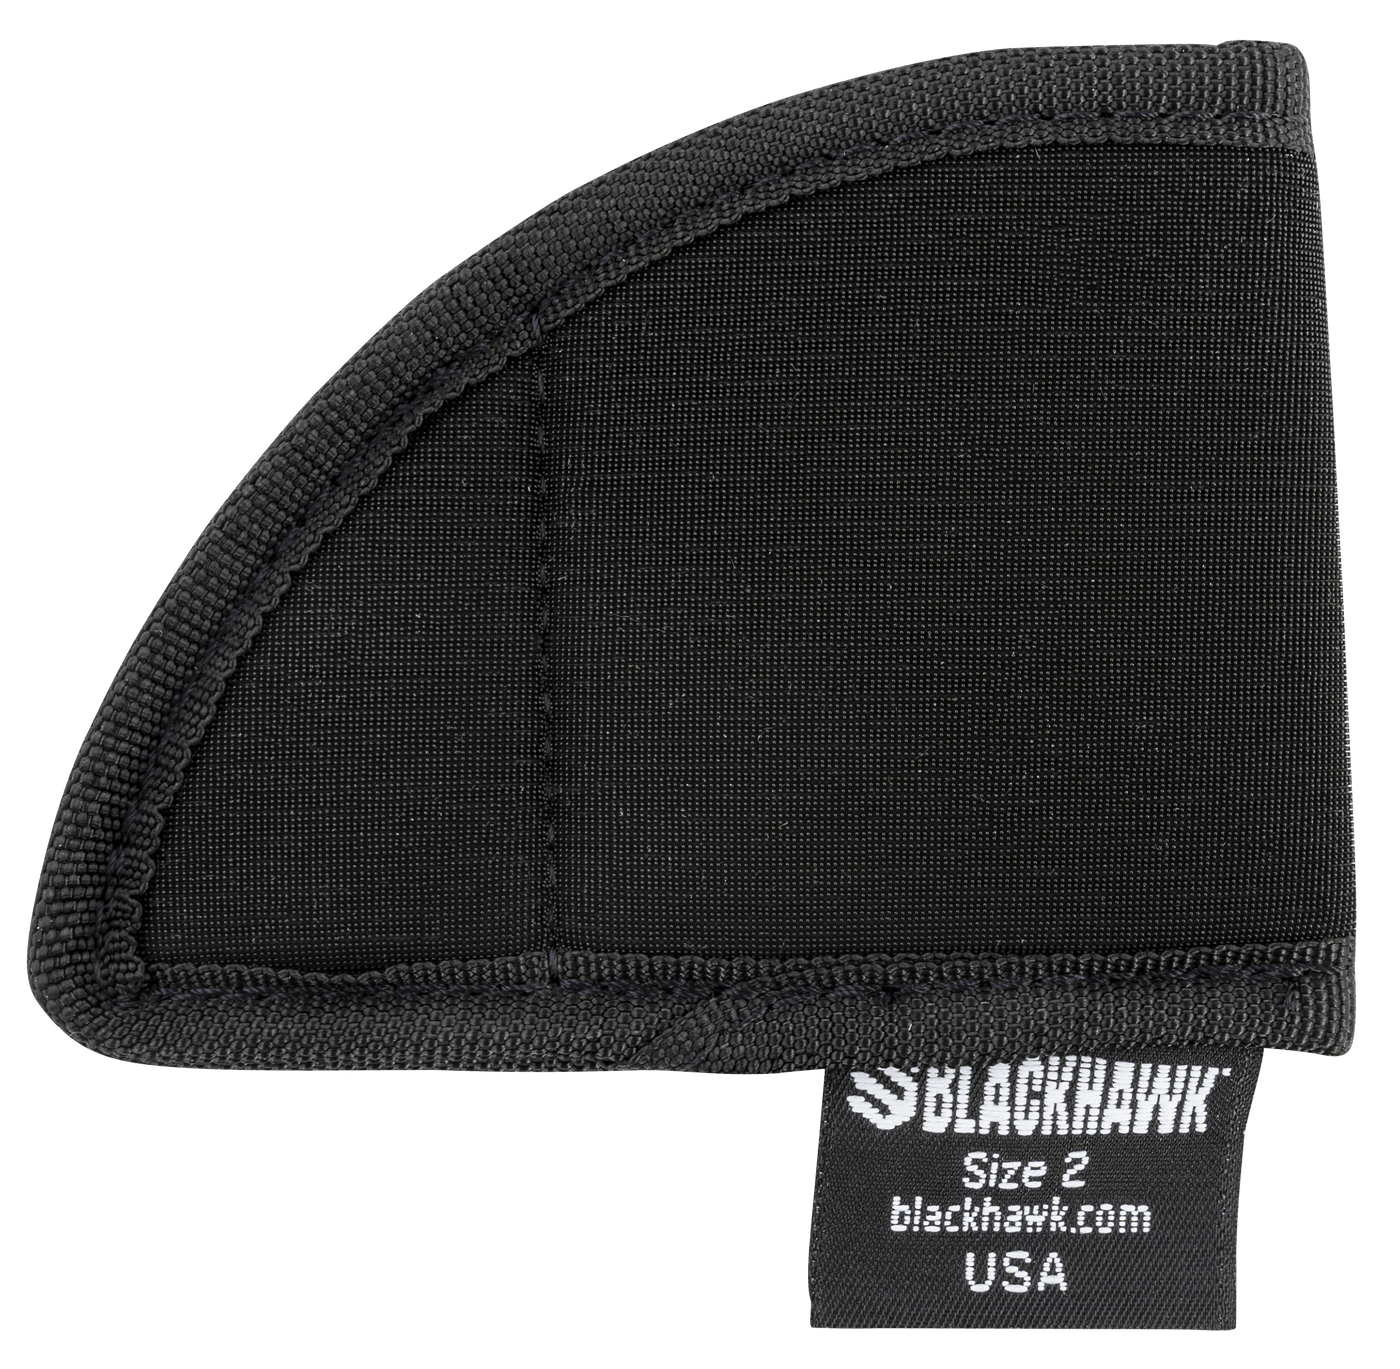 Blackhawk Blackhawk Tecgrip Mag Pouch - Iwb Sub Compact Mags Black Holsters And Related Items